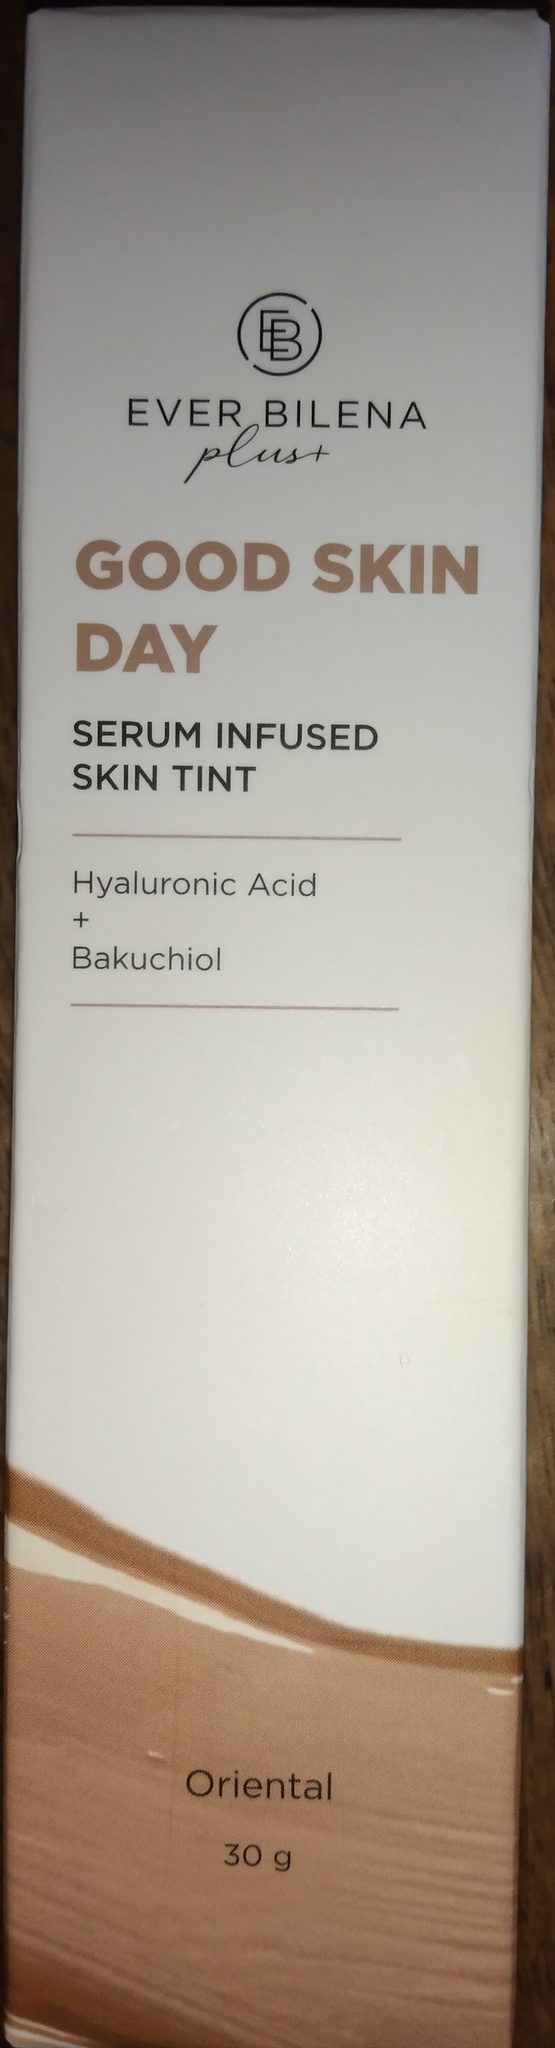 Ever Bilena Serum Skin Tint